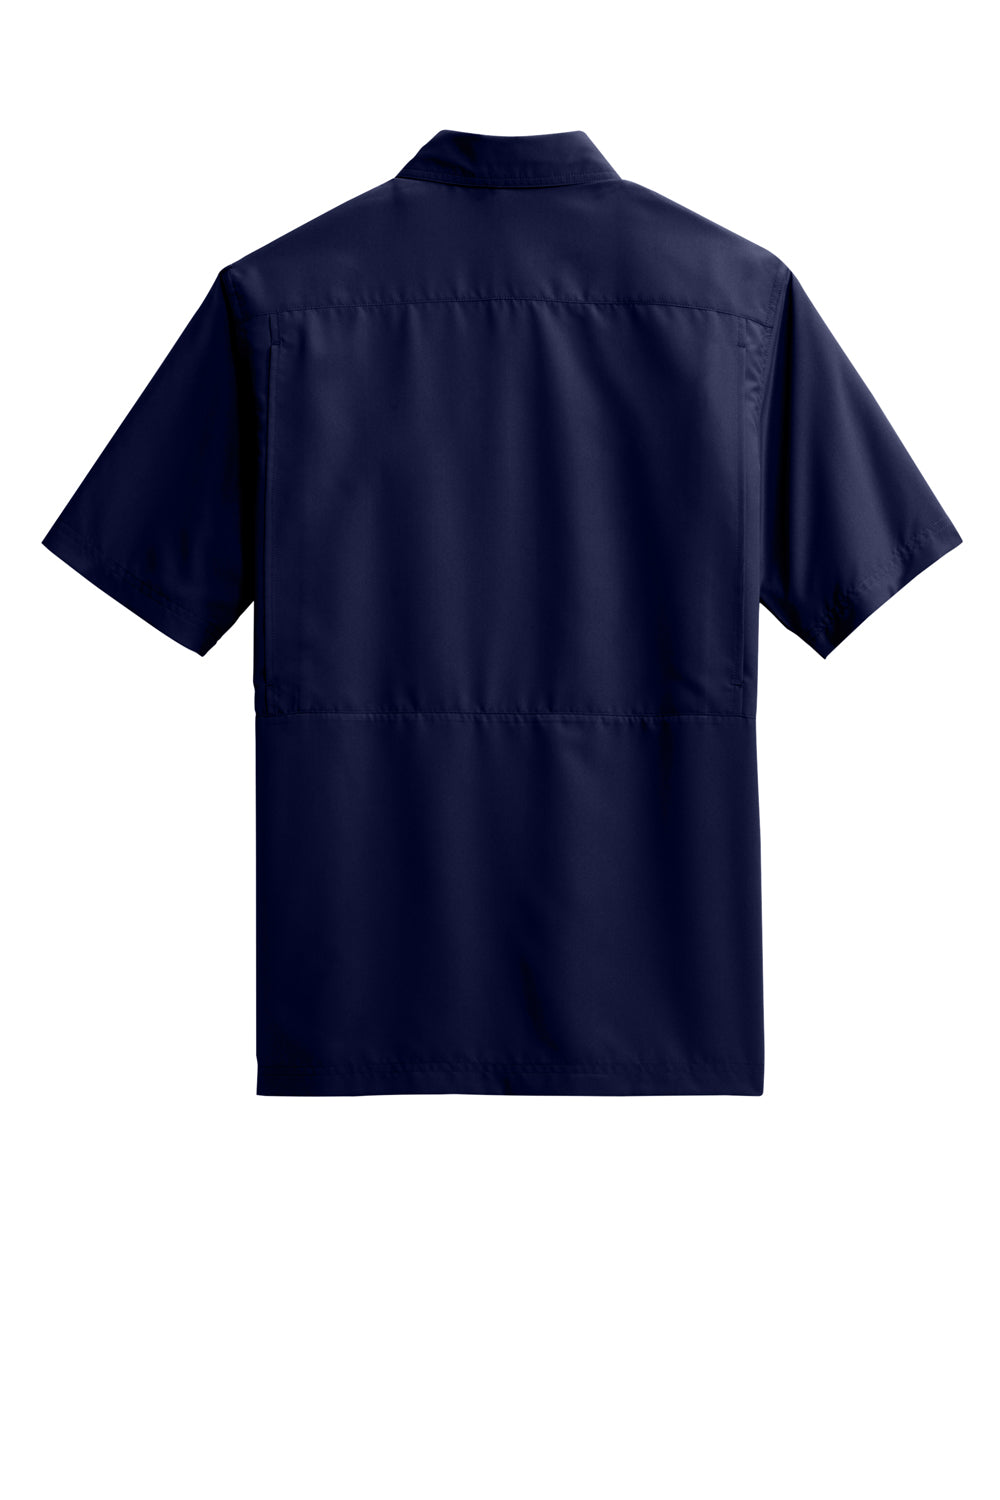 Port Authority W961 UV Daybreak Short Sleeve Button Down Shirt True Navy Blue Flat Back